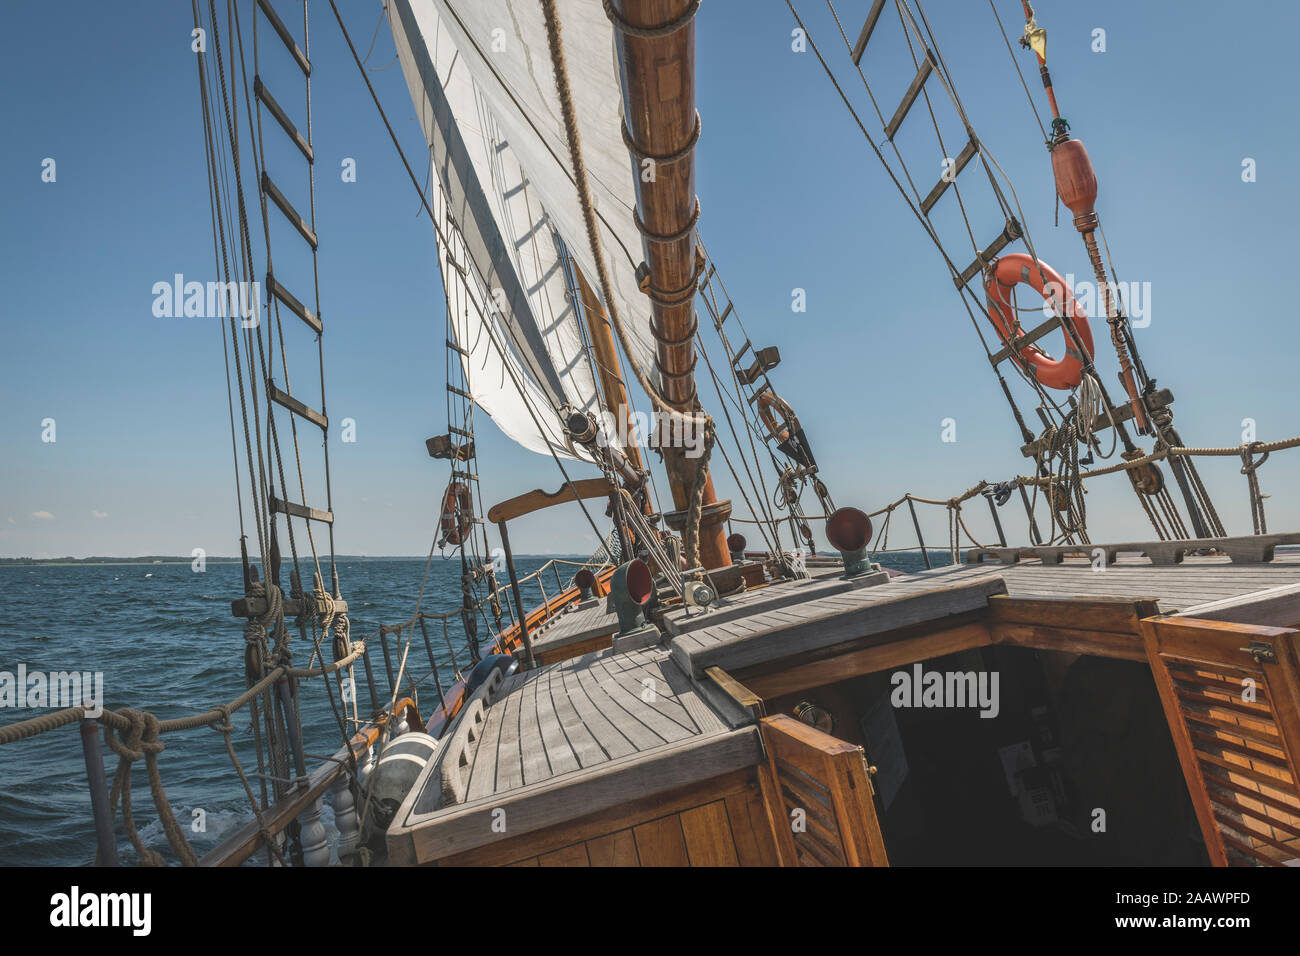 Denmark, Baltic Sea, Gaff schooner poop deck seen on peaceful day Stock Photo